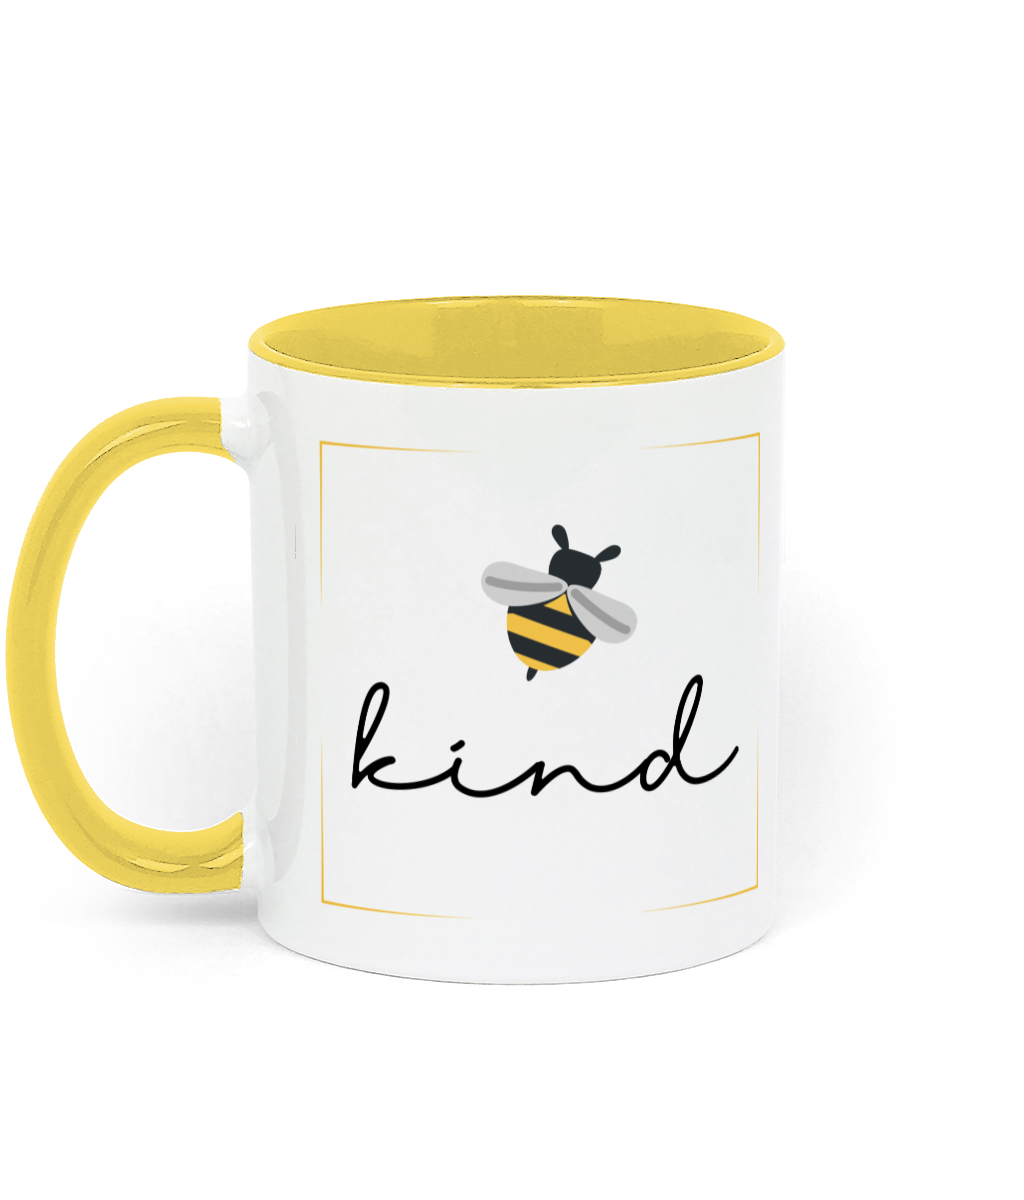 Be Kind Mug.11 oz mug. Daily Affirmations, Motivation, Inspiration. Perfect Gift. Two-toned. Yellow